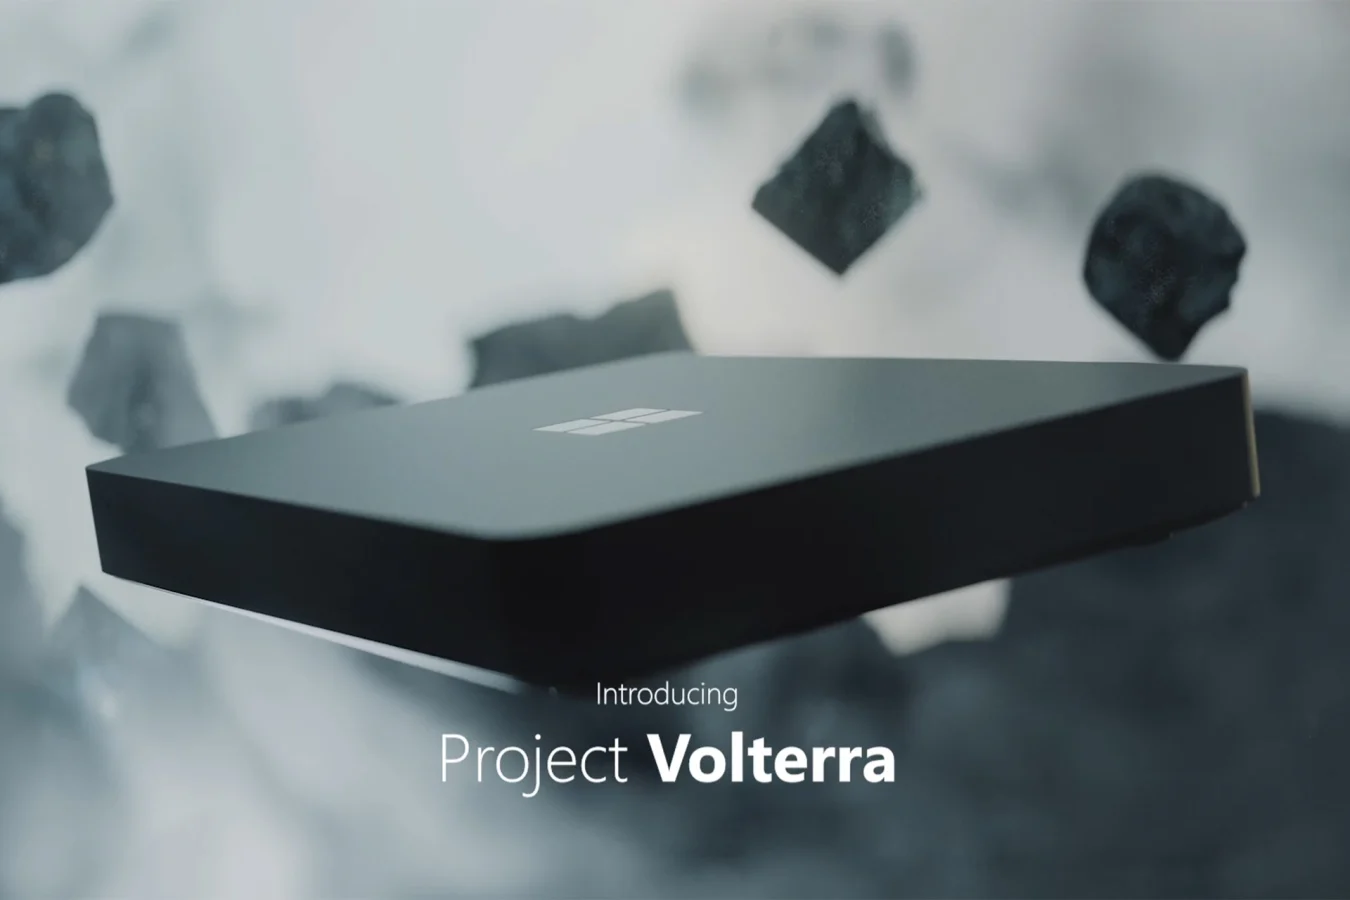 Microsoft Project Volterra desktop